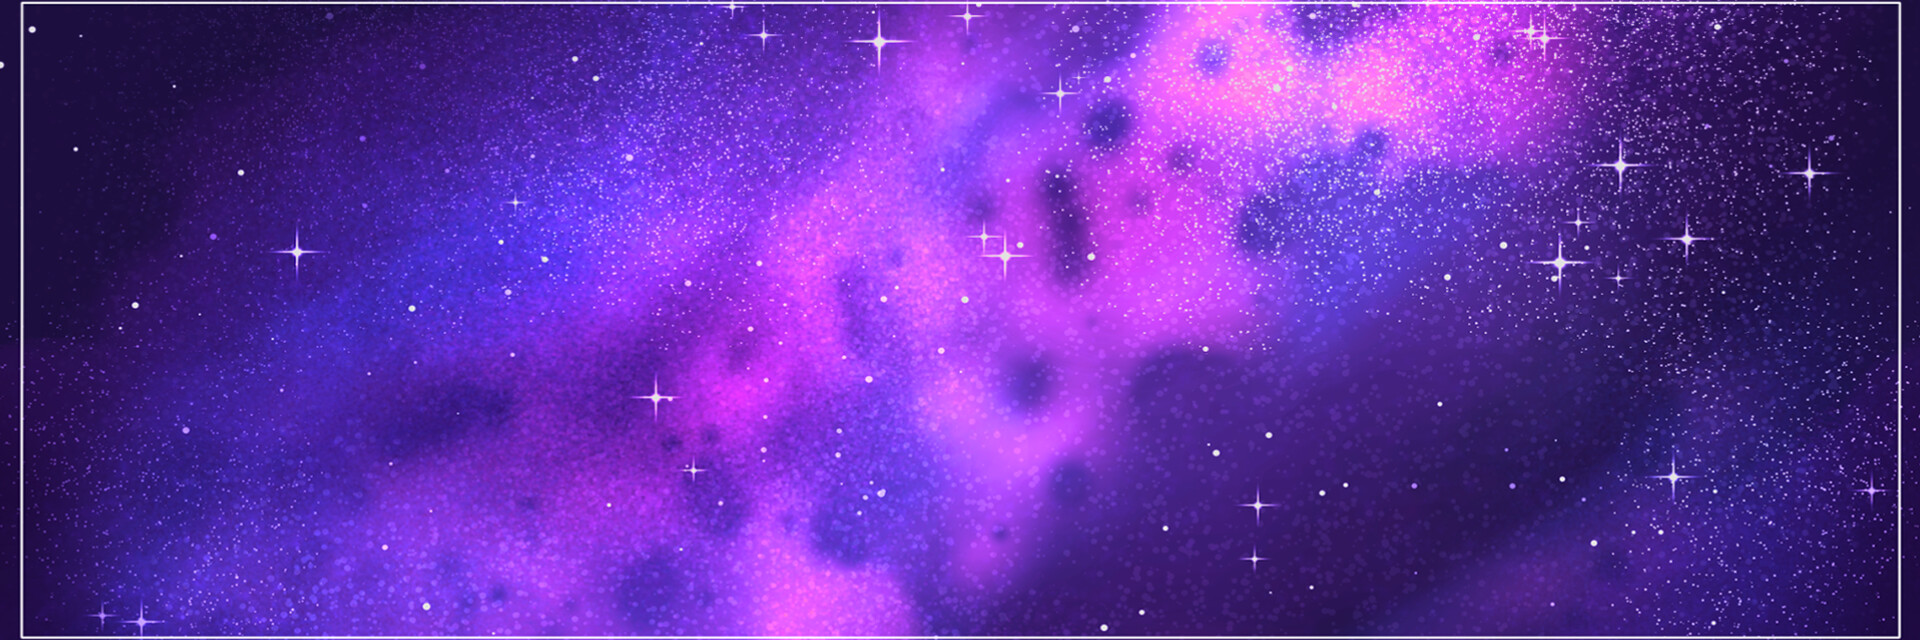 galaxy twitter backgrounds galaxy twitter layout